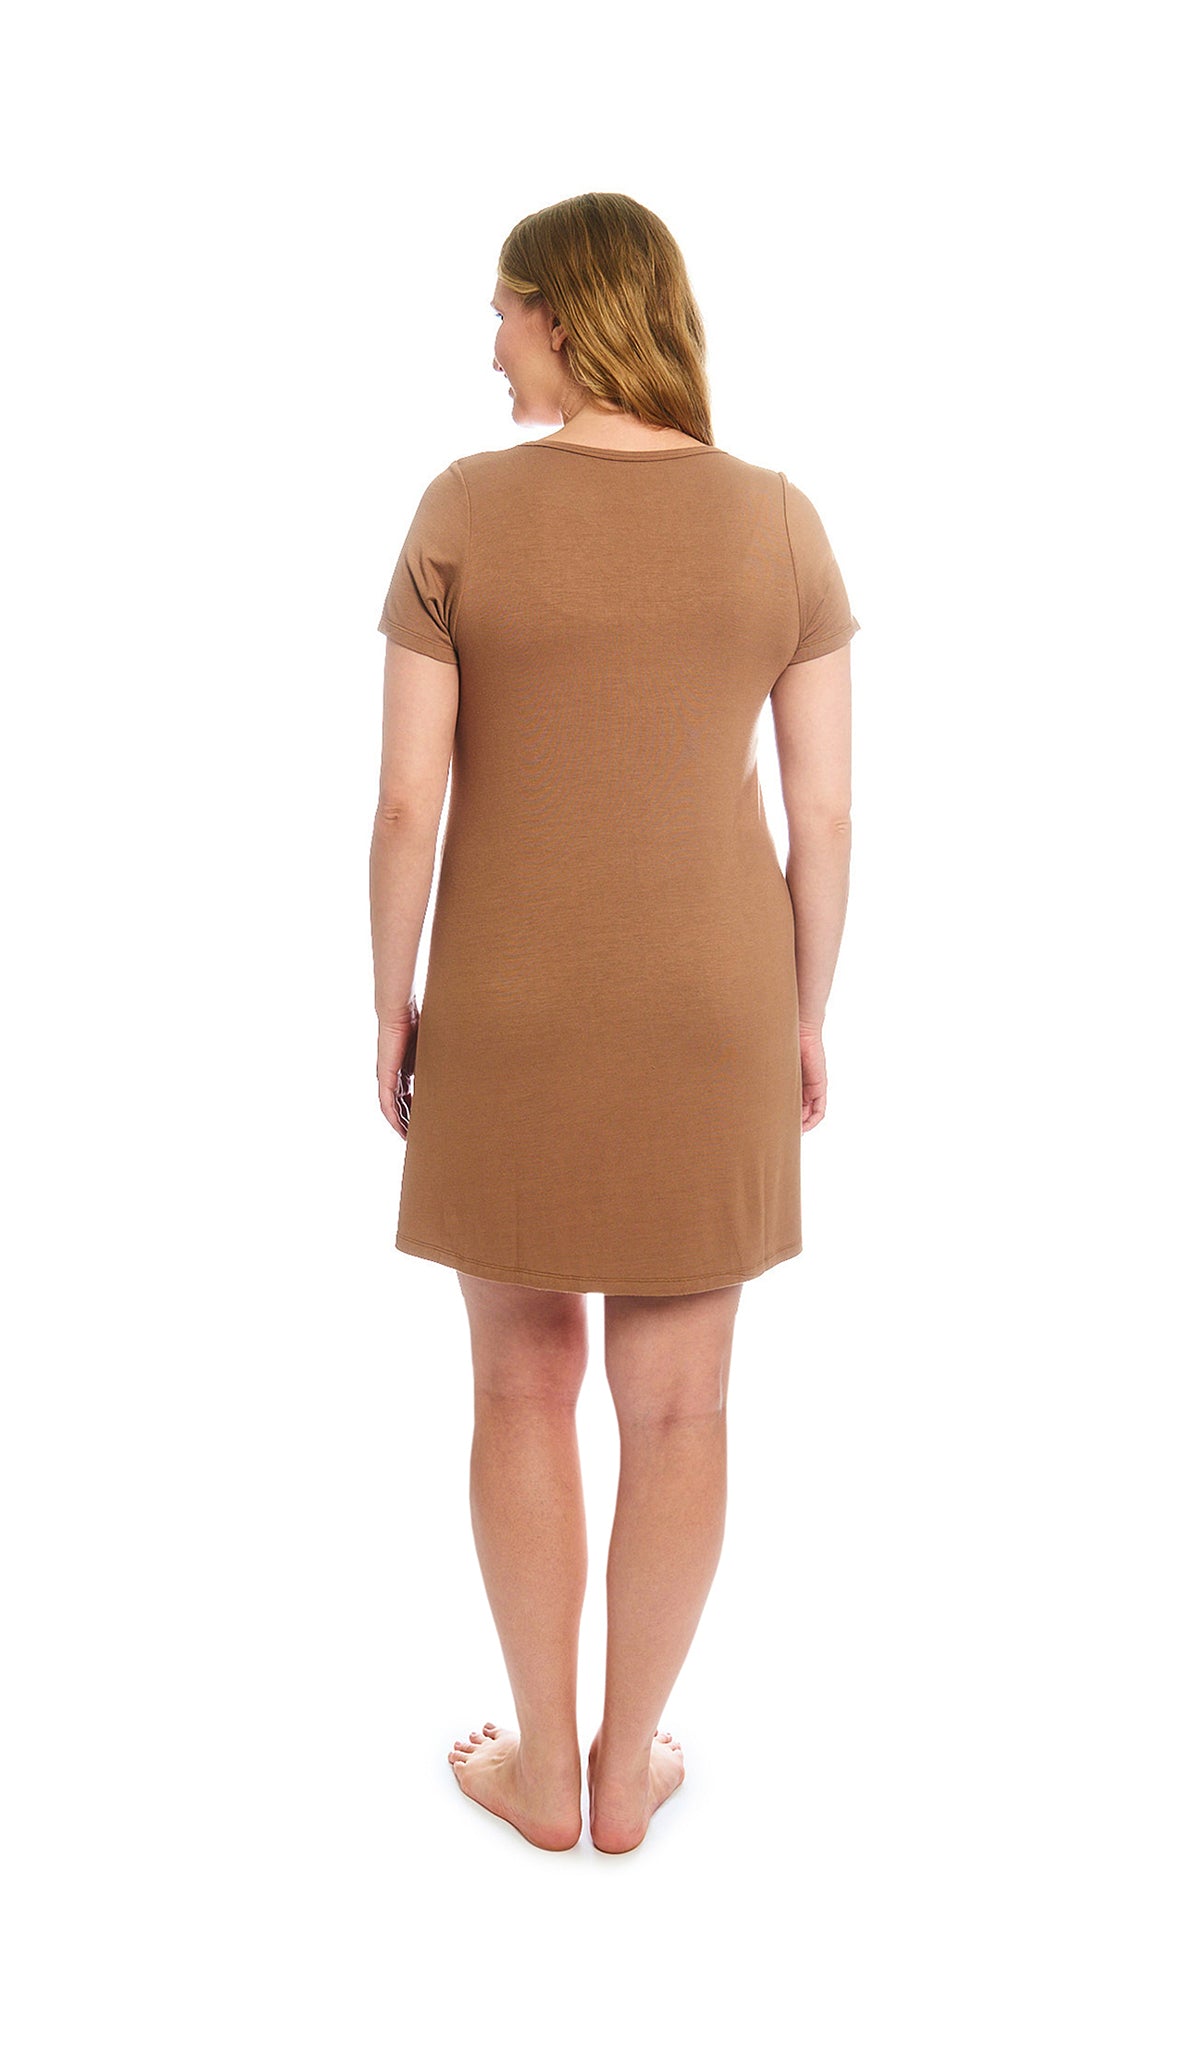 Mocha Stripe Carolyn 4-Piece Set, back shot of woman wearing short sleeve nightgown.